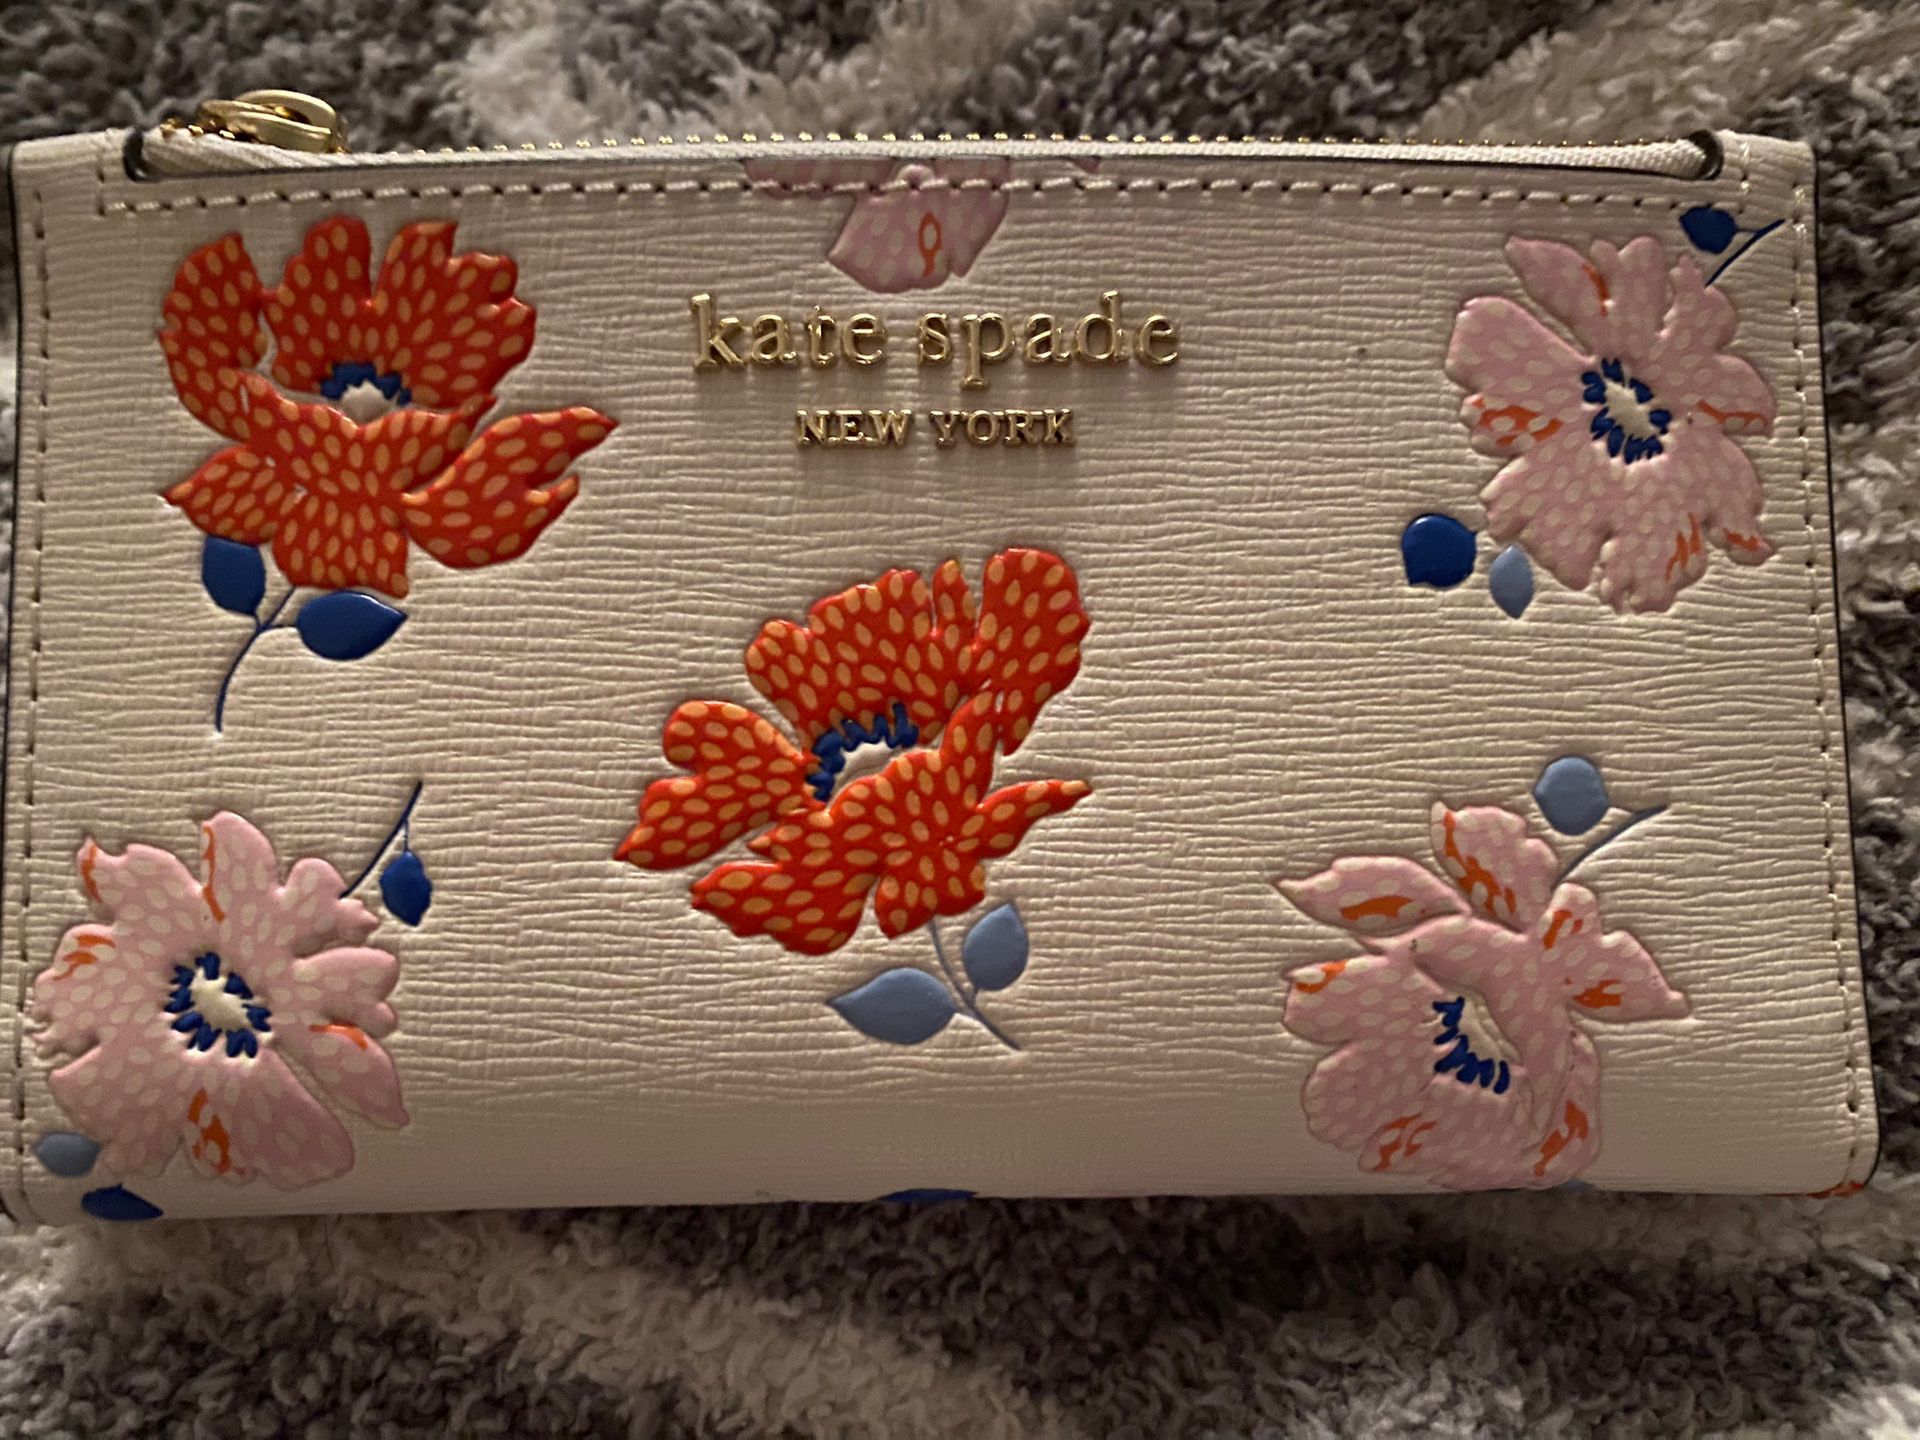 Beautiful Brand New Kate Spade Wallet